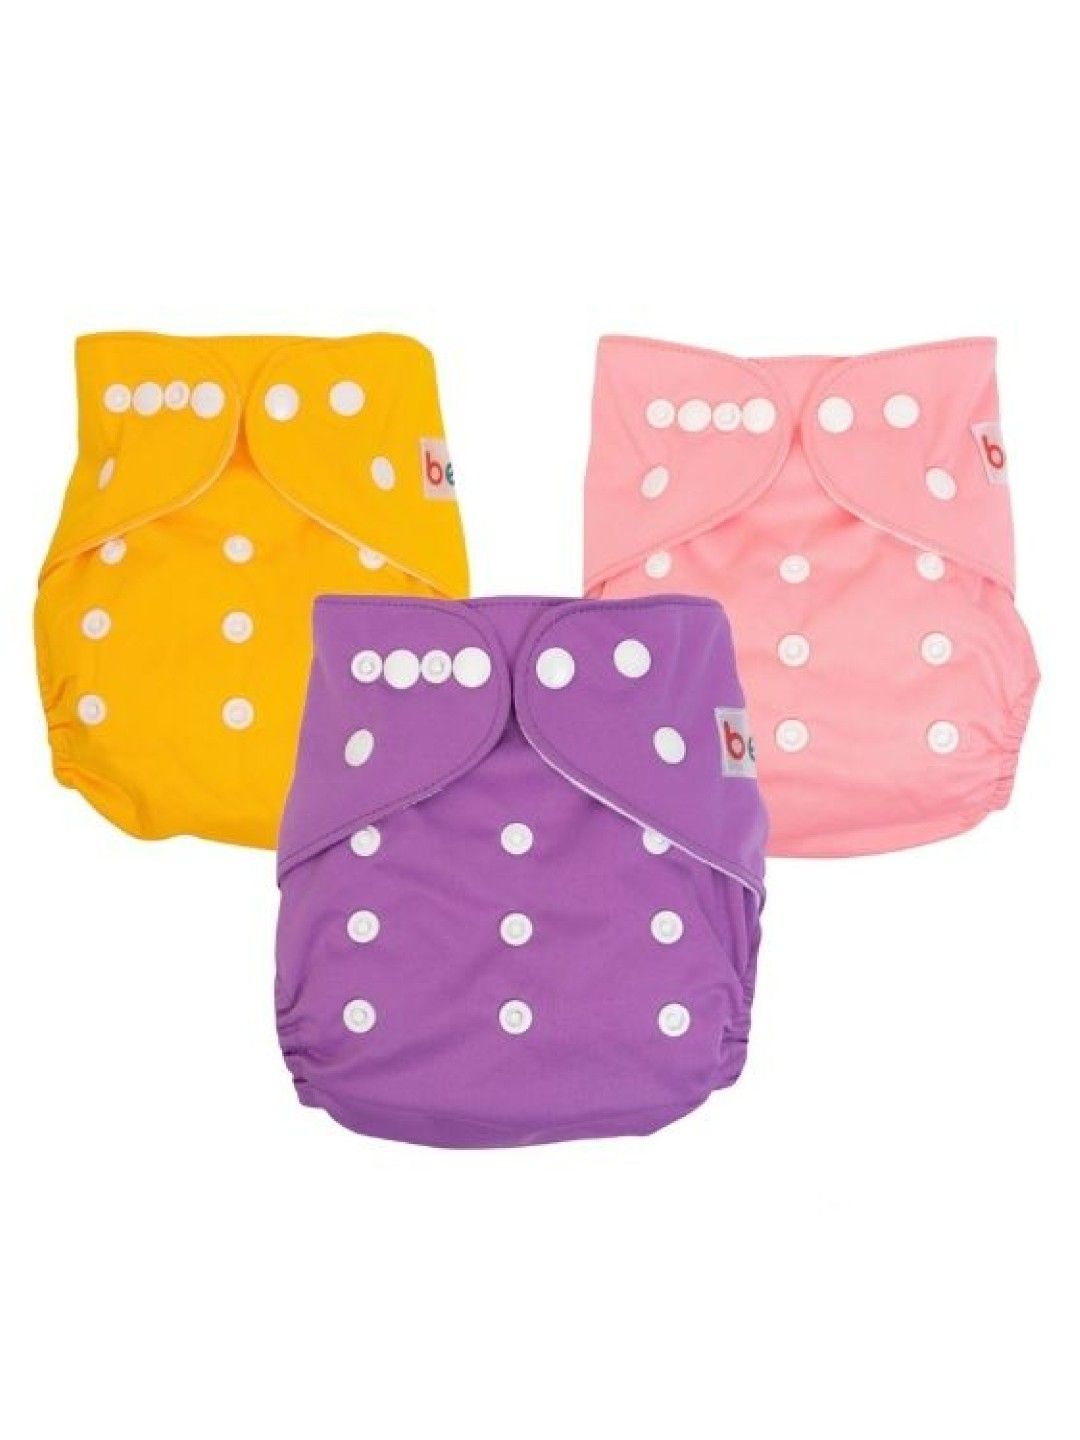 bean fashion Snappies Pastel Tones Gear Cloth Diaper (Set of 3)